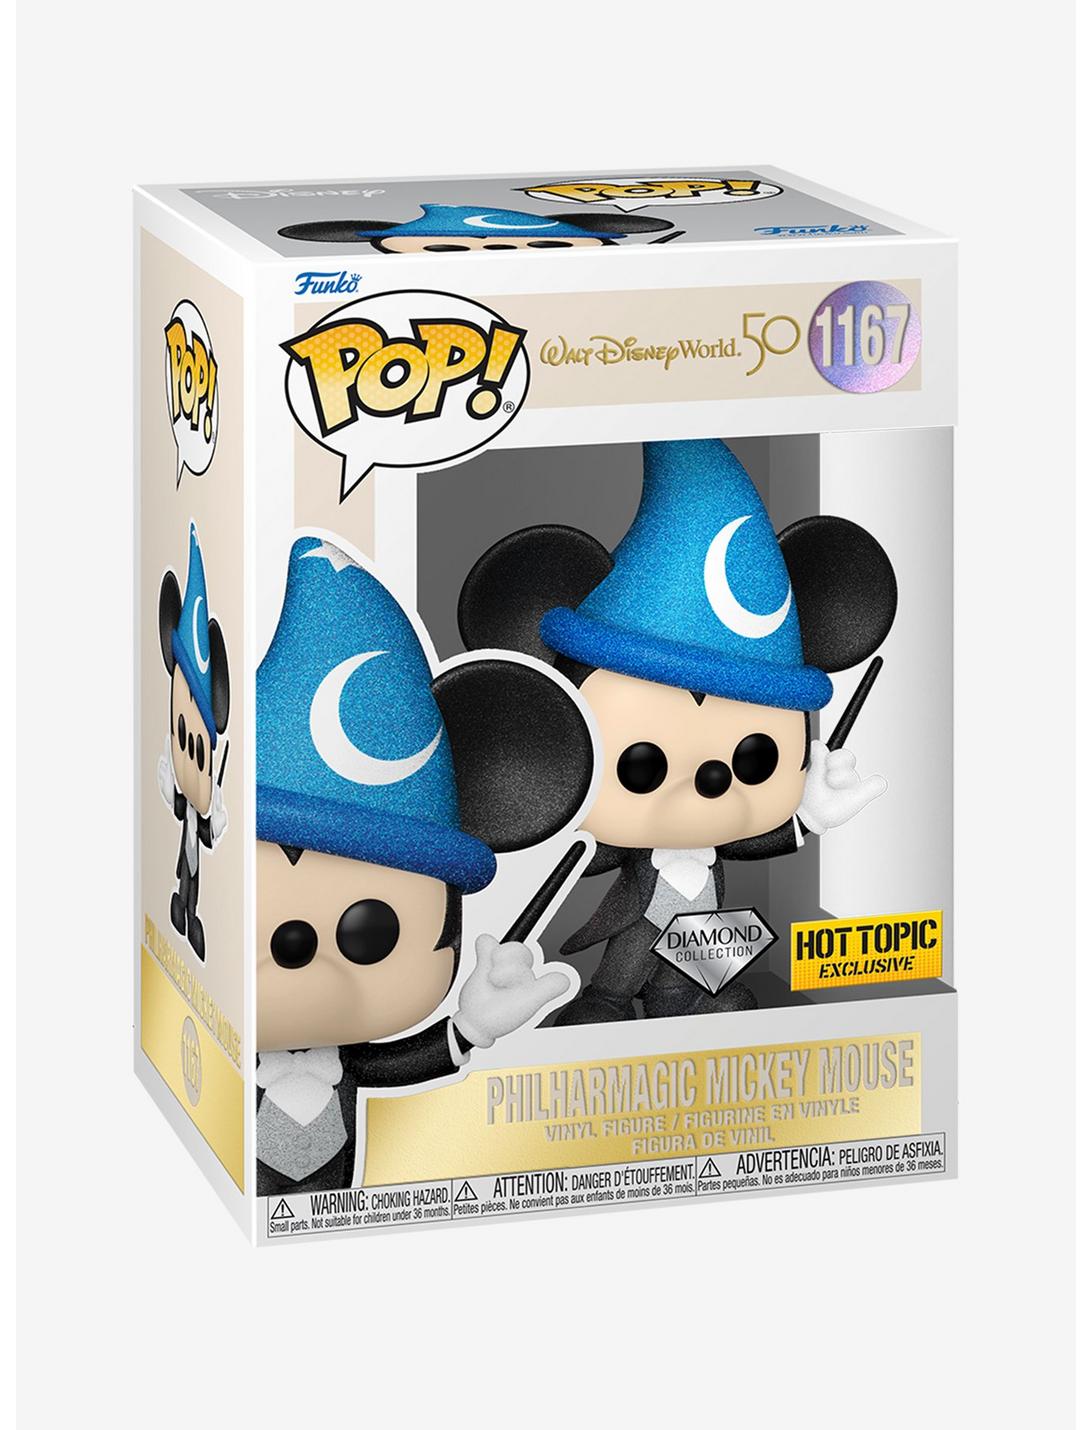 Disney Walt Disney World 50th Diamond Collection Pop! PhilharMagic Mickey Mouse Vinyl Figure Hot Topic Exclusive, , hi-res